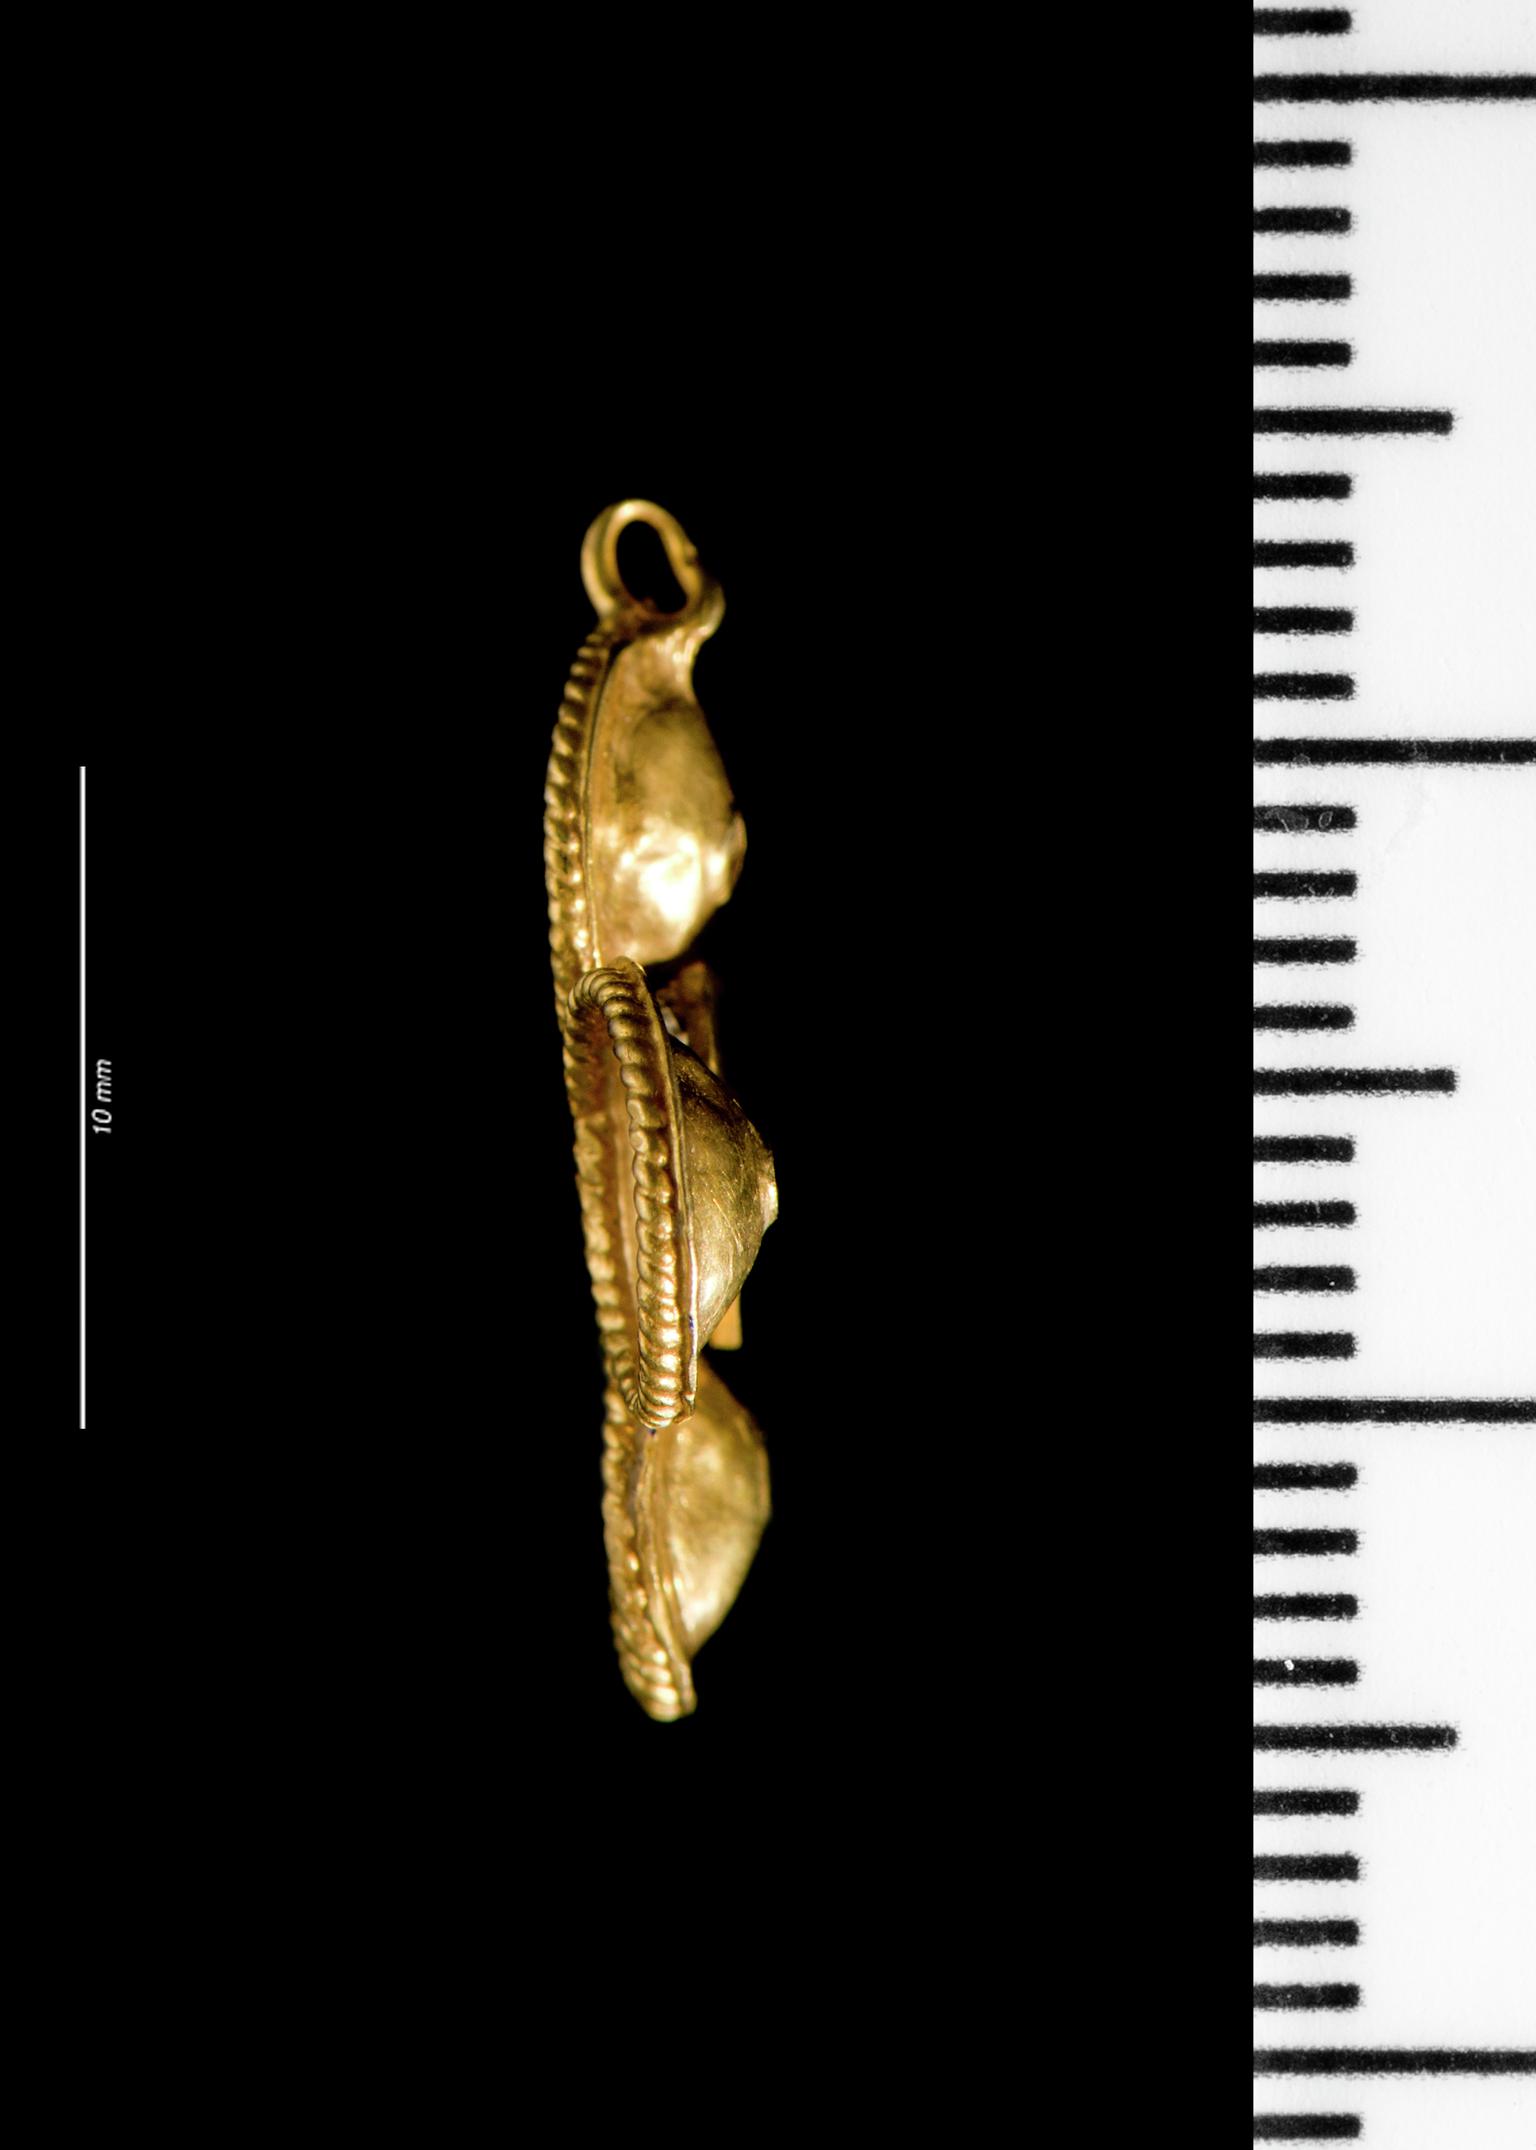 Post-Medieval gold pendant